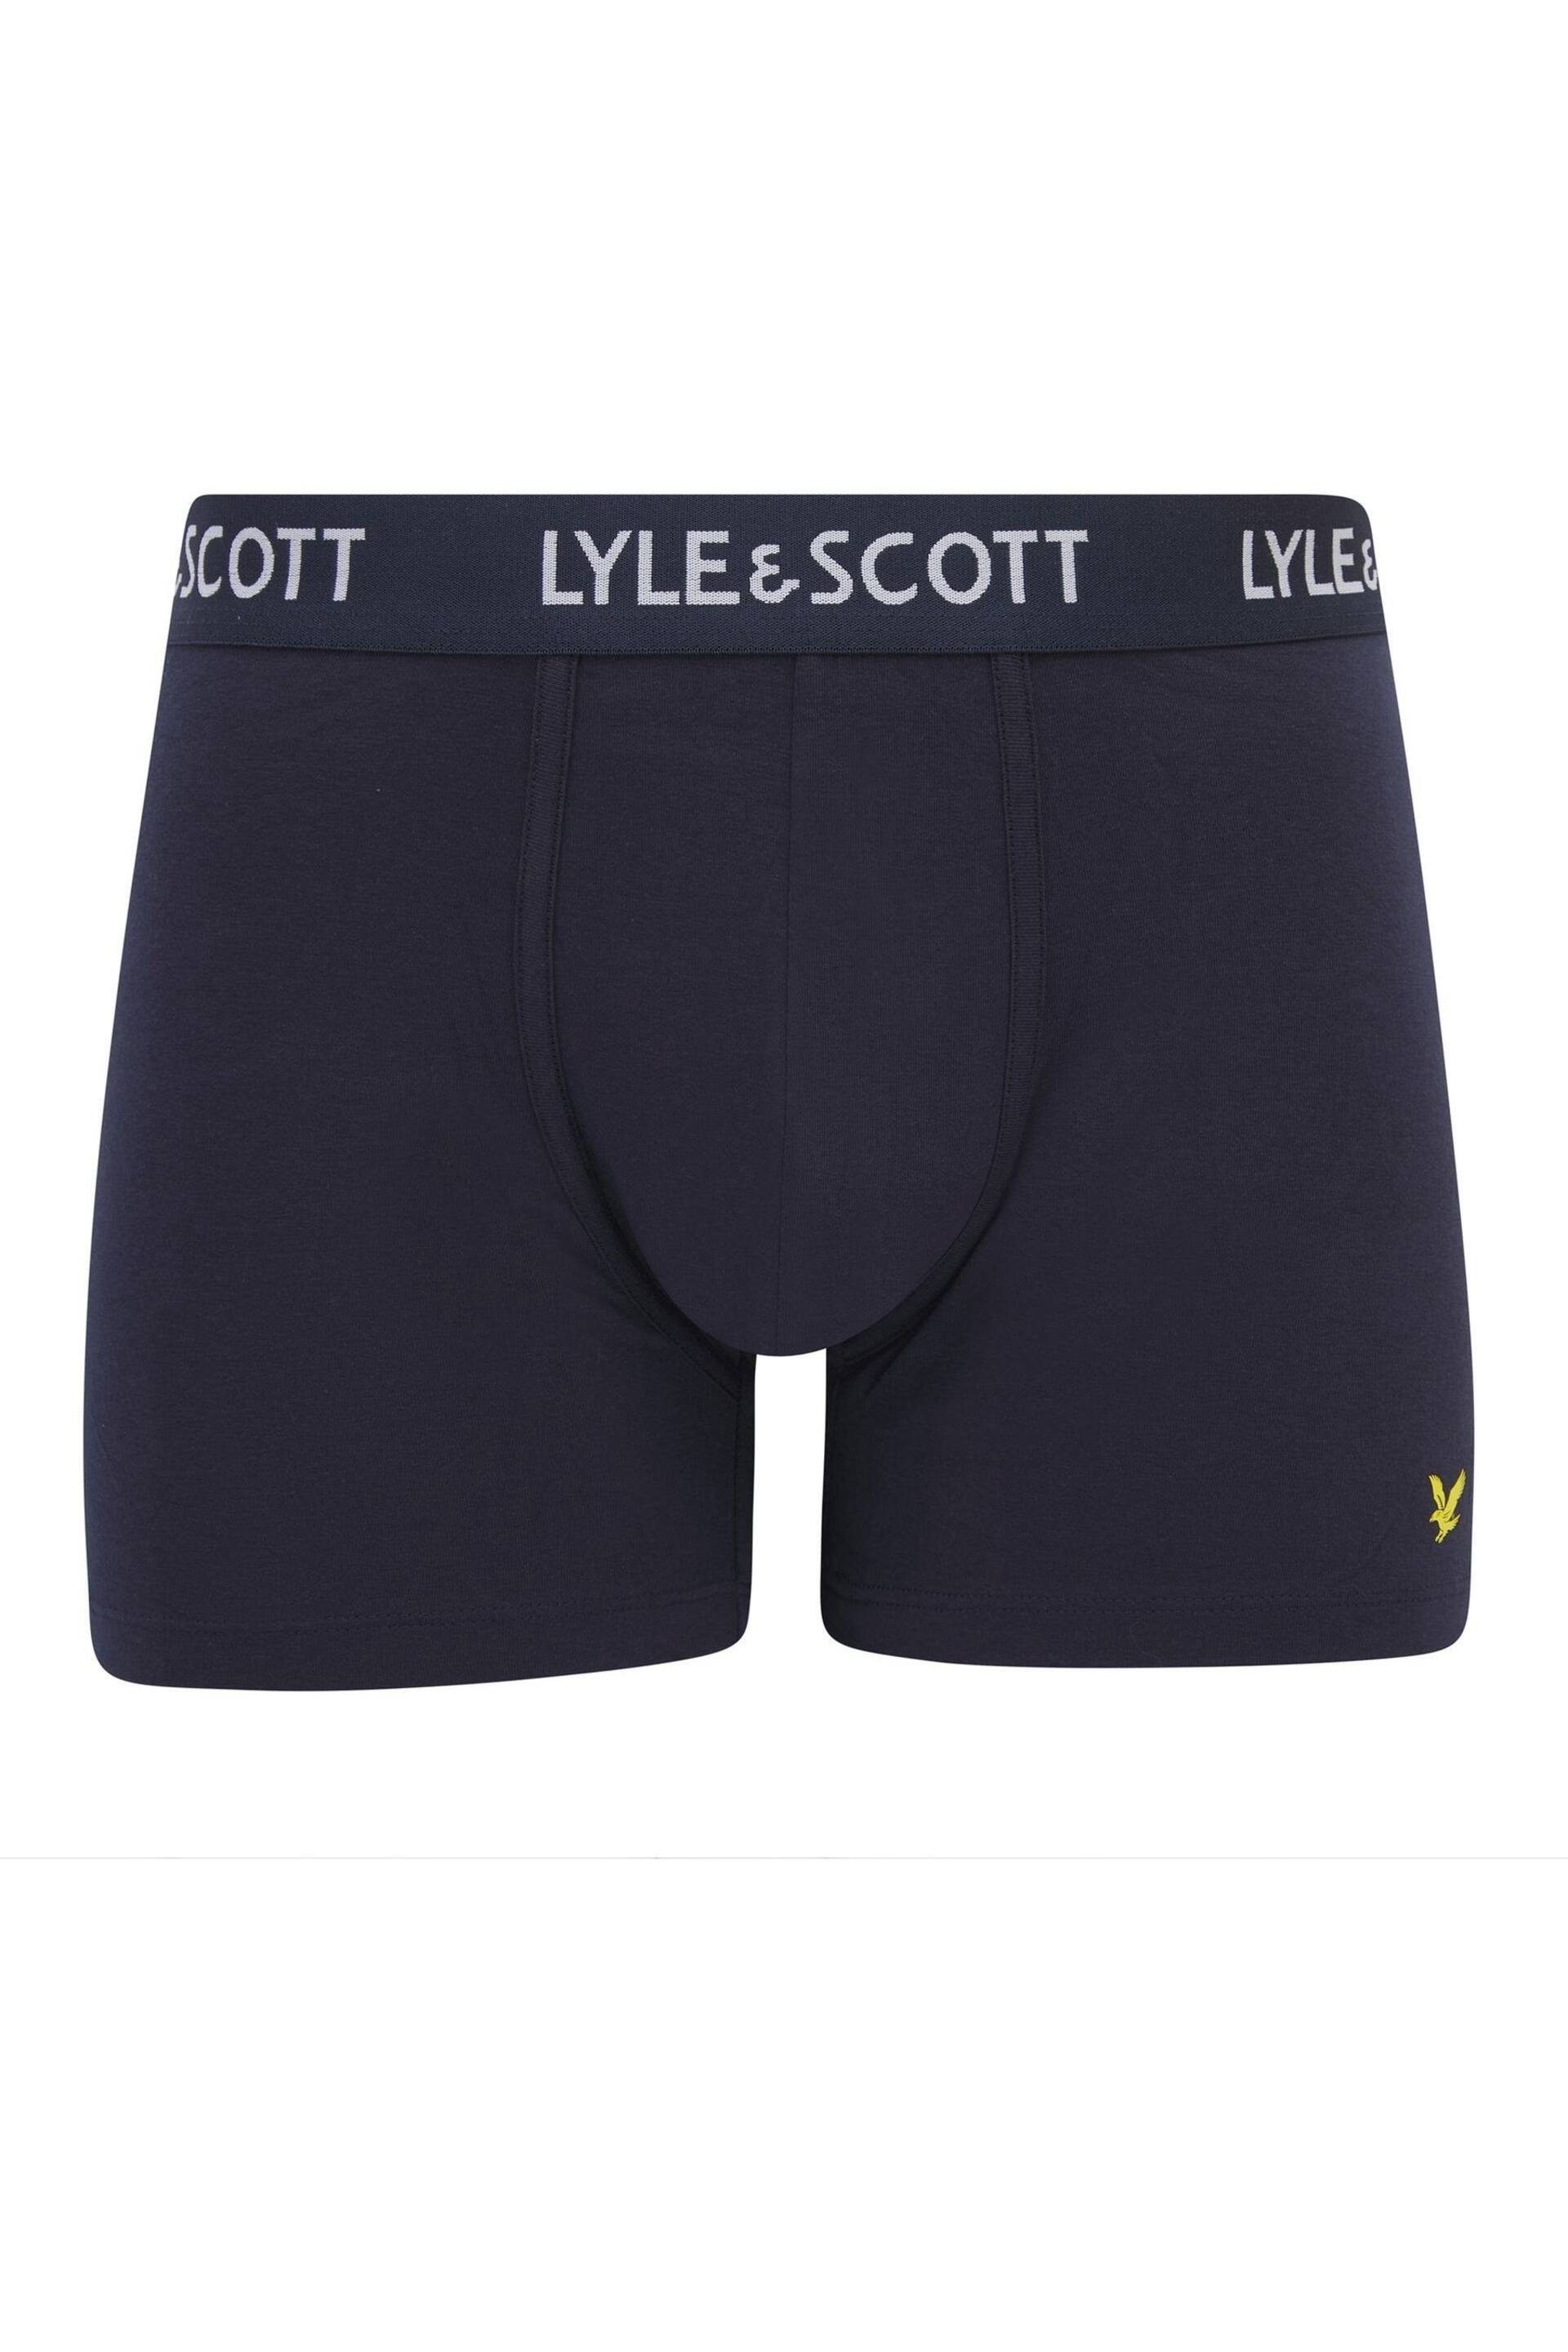 Lyle & Scott Ethan Premium White Underwear Trunks 3 Pack - Image 4 of 4